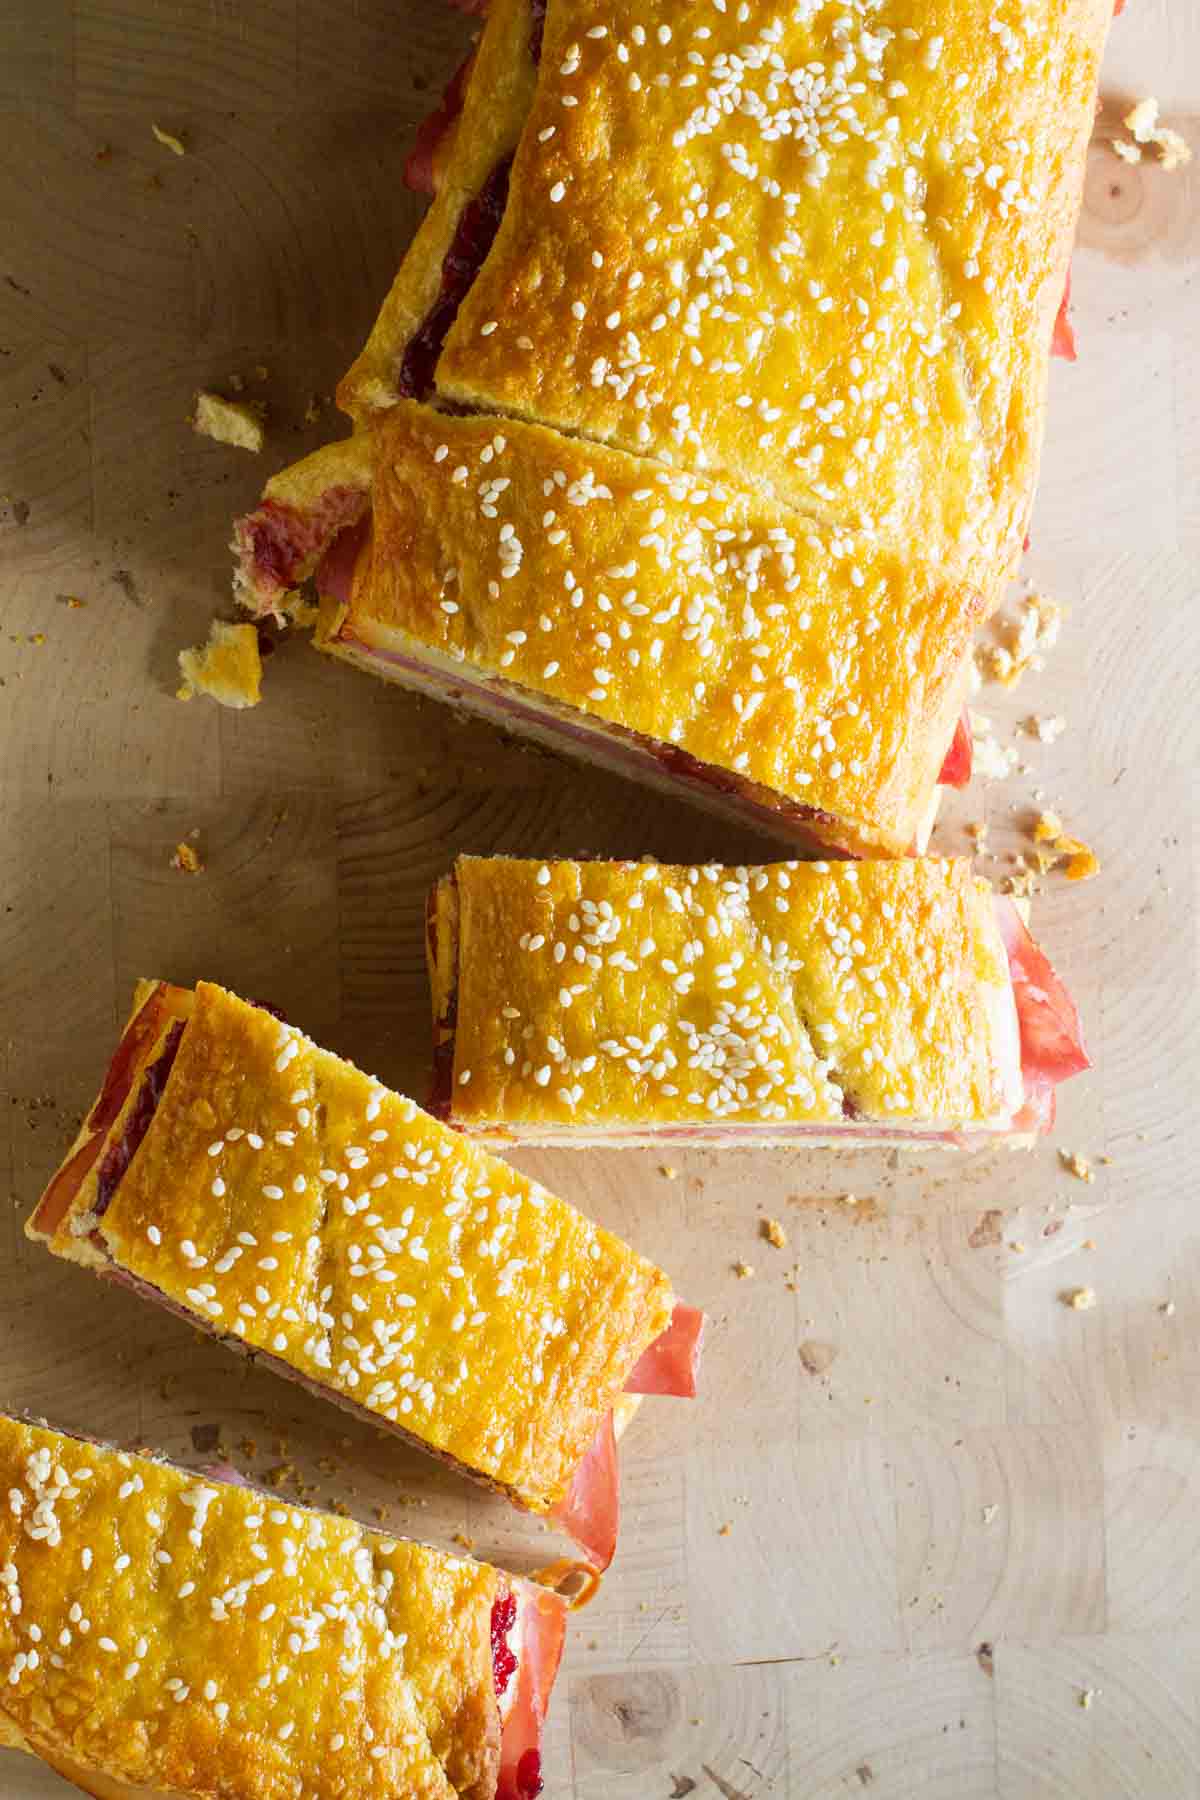 Monte Cristo Sandwich Loaf cut into slices.